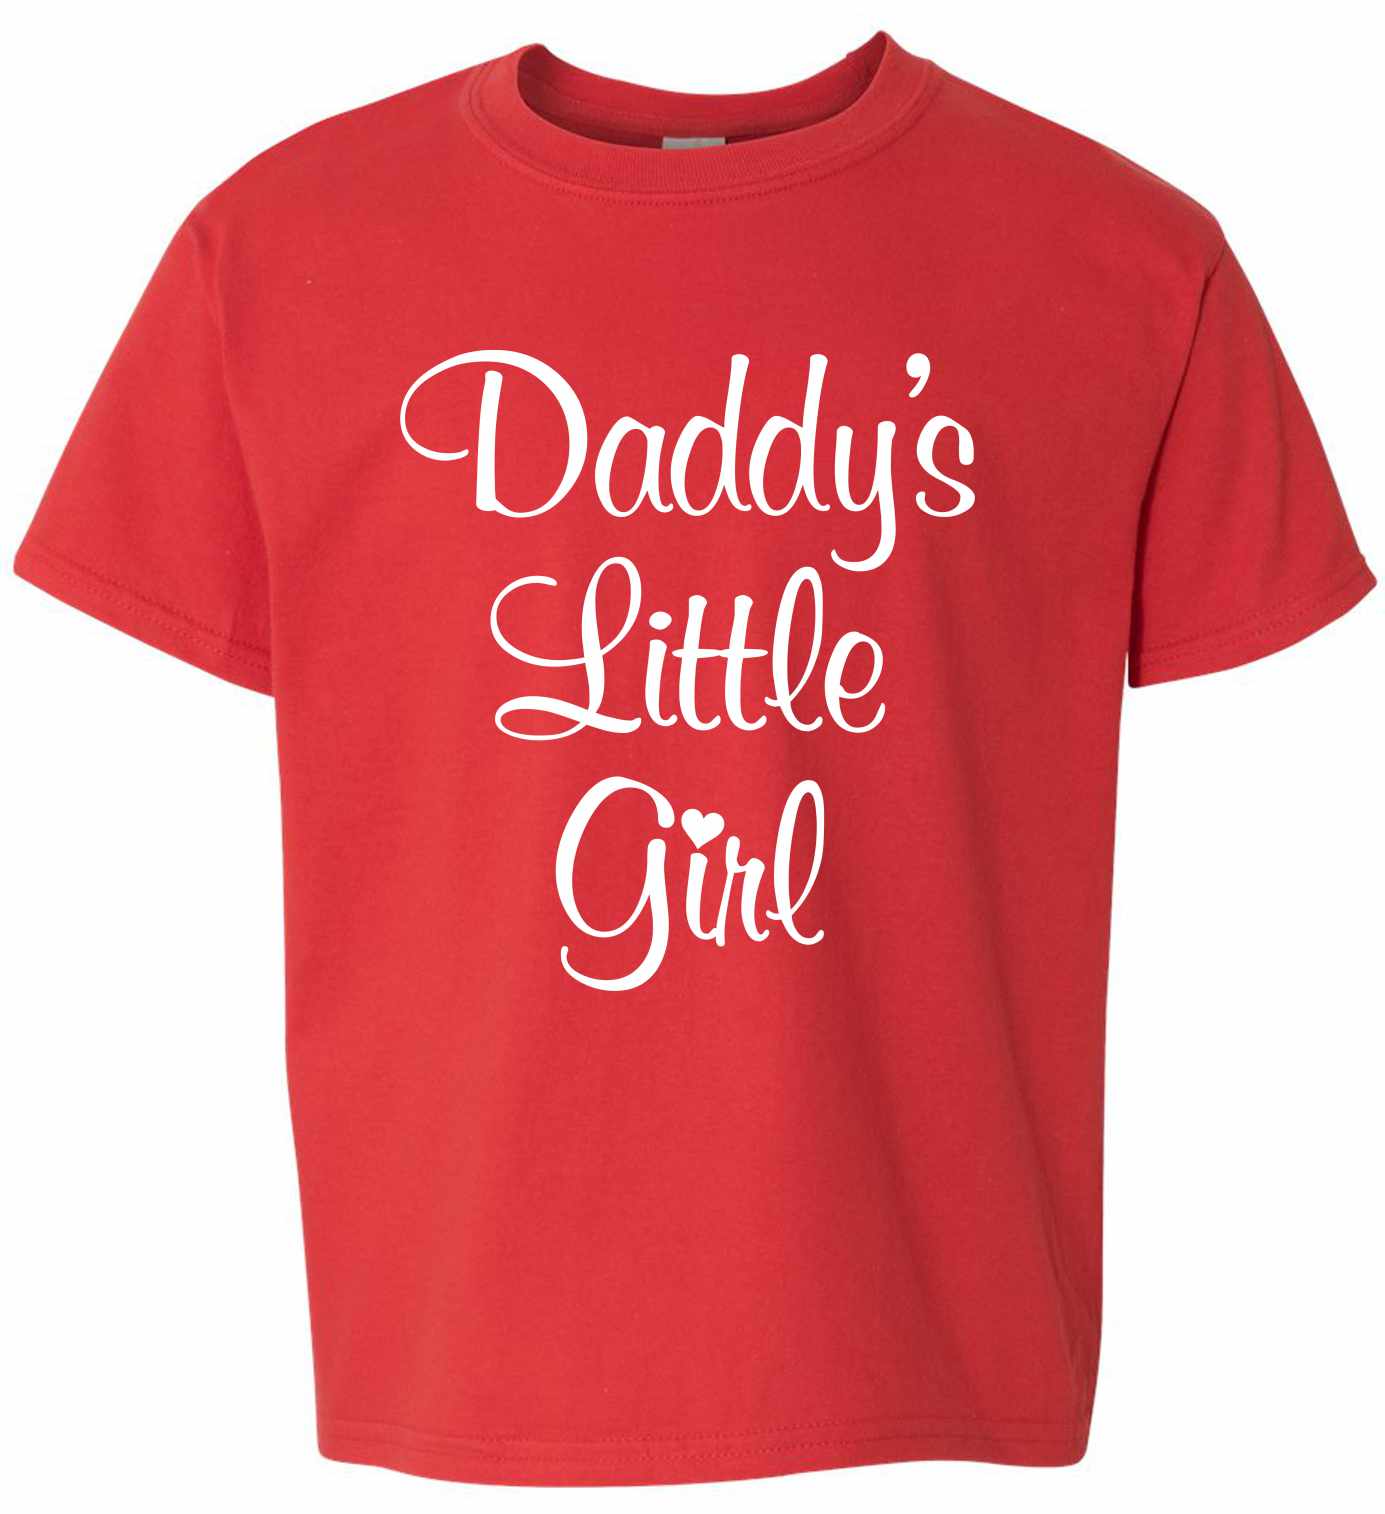 Daddy's Little Girl on Kids T-Shirt